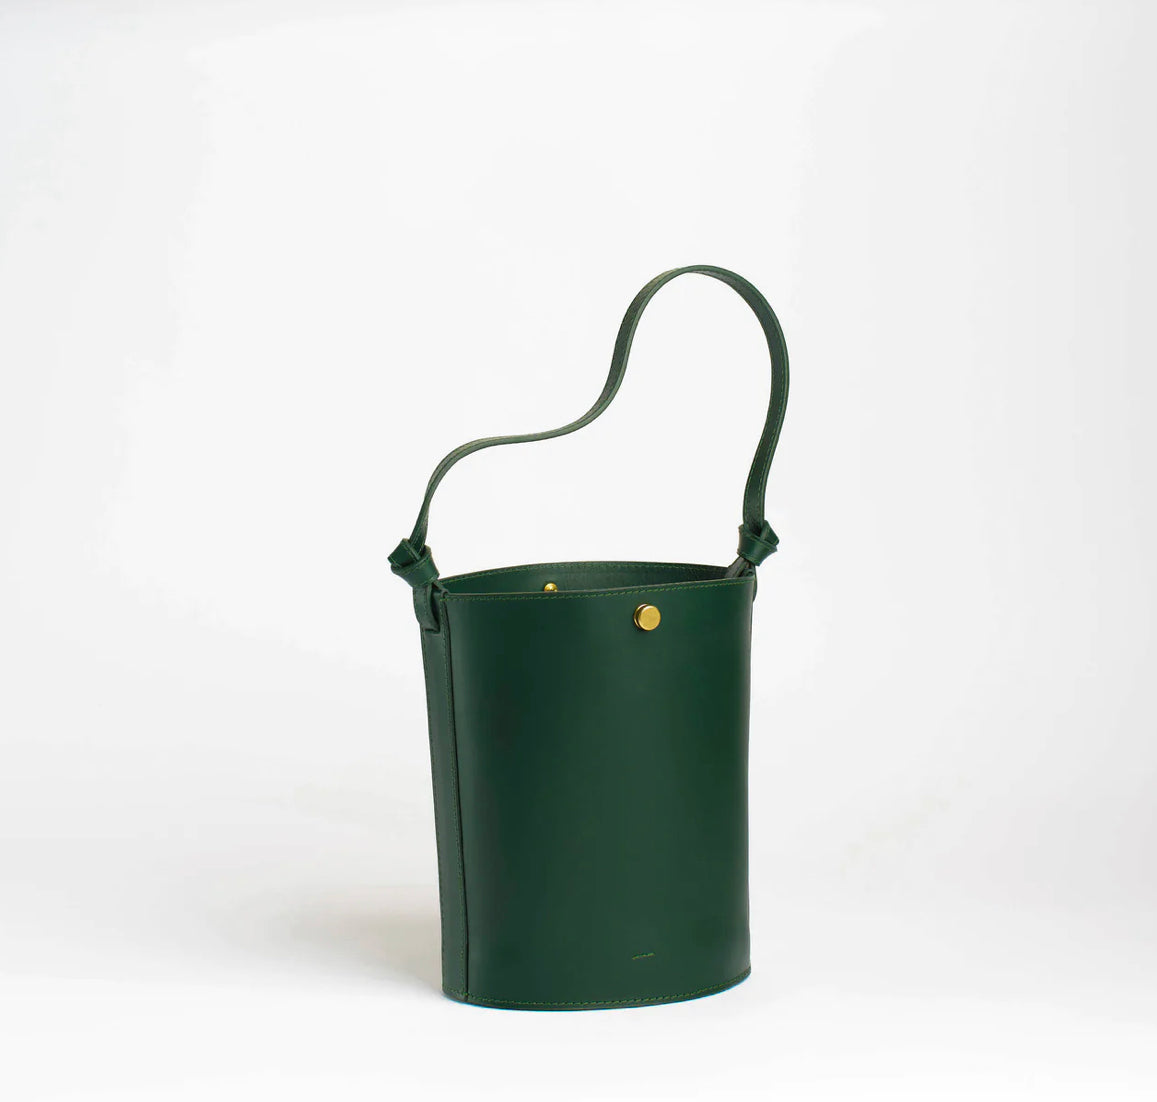 Small Hilma Leather Bucket Bag